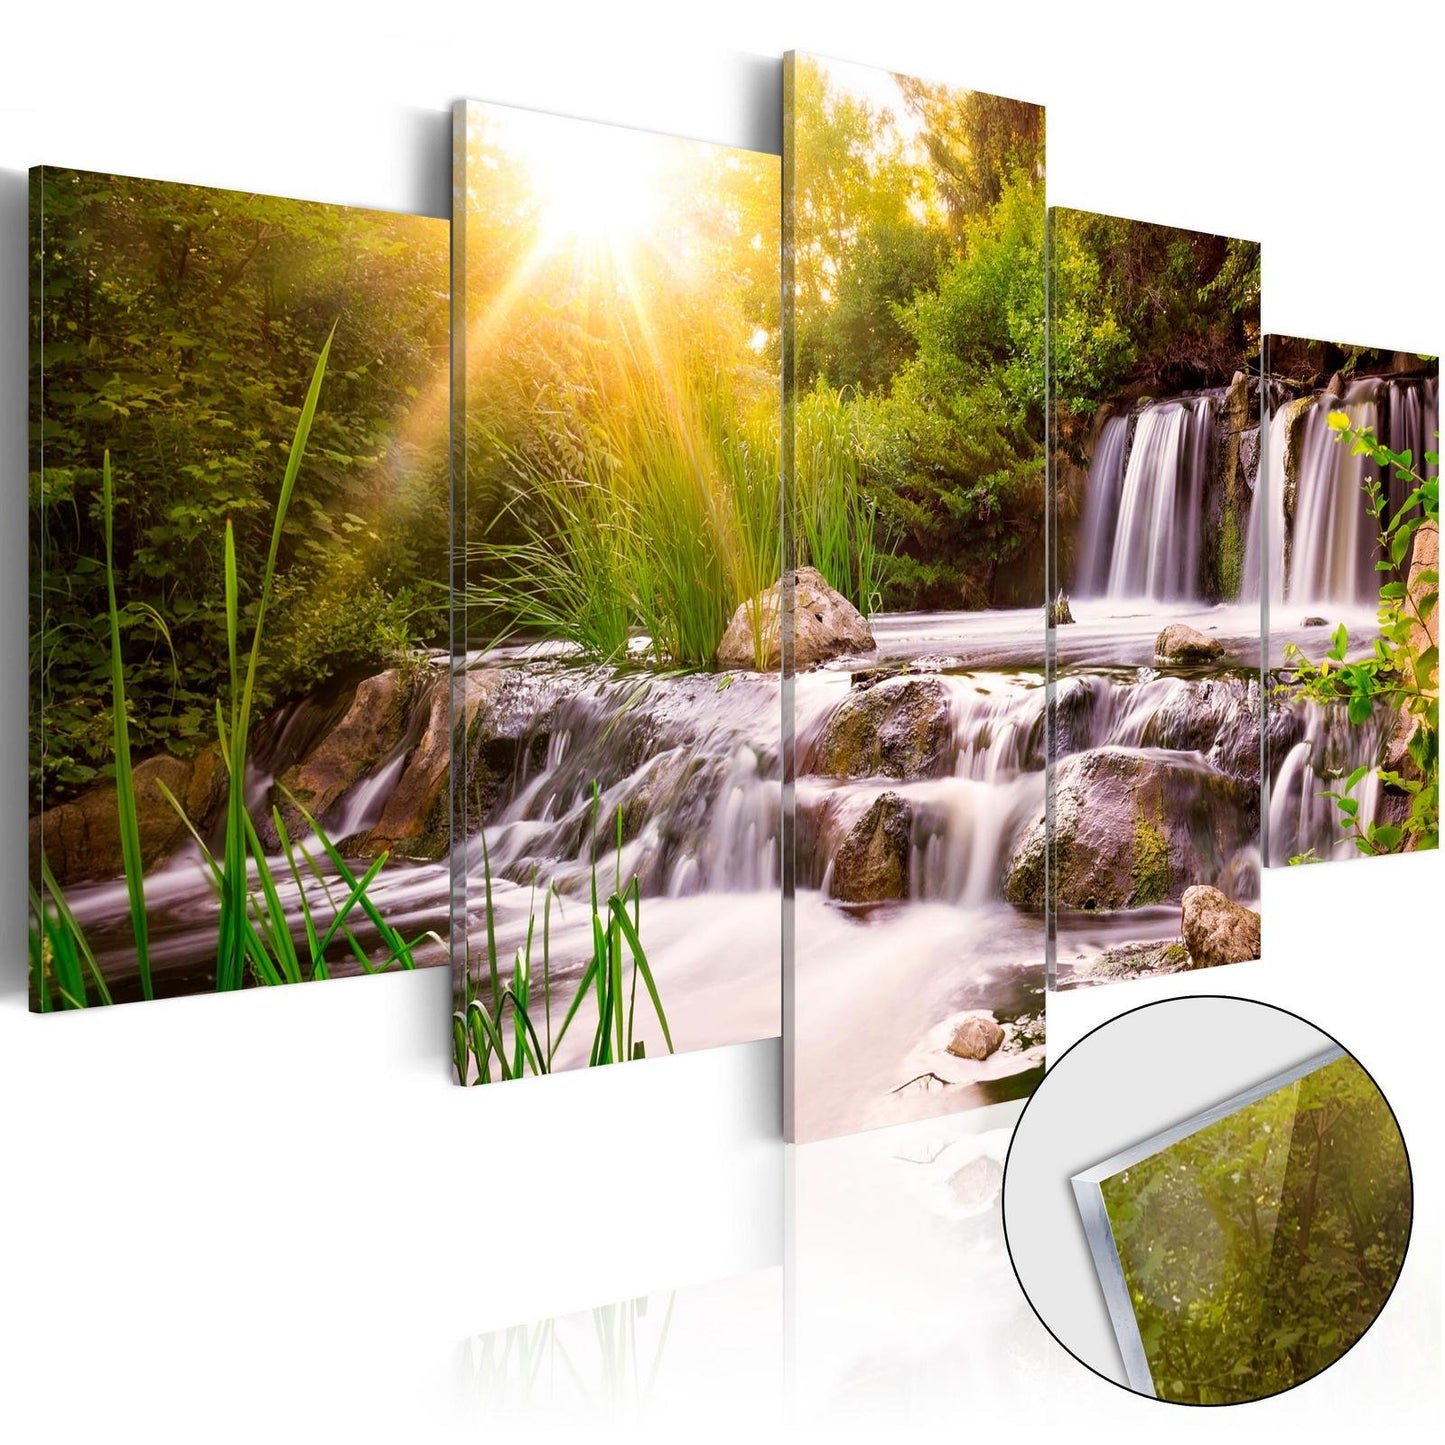 Afbeelding op acrylglas - Forest Waterfall [Glass]